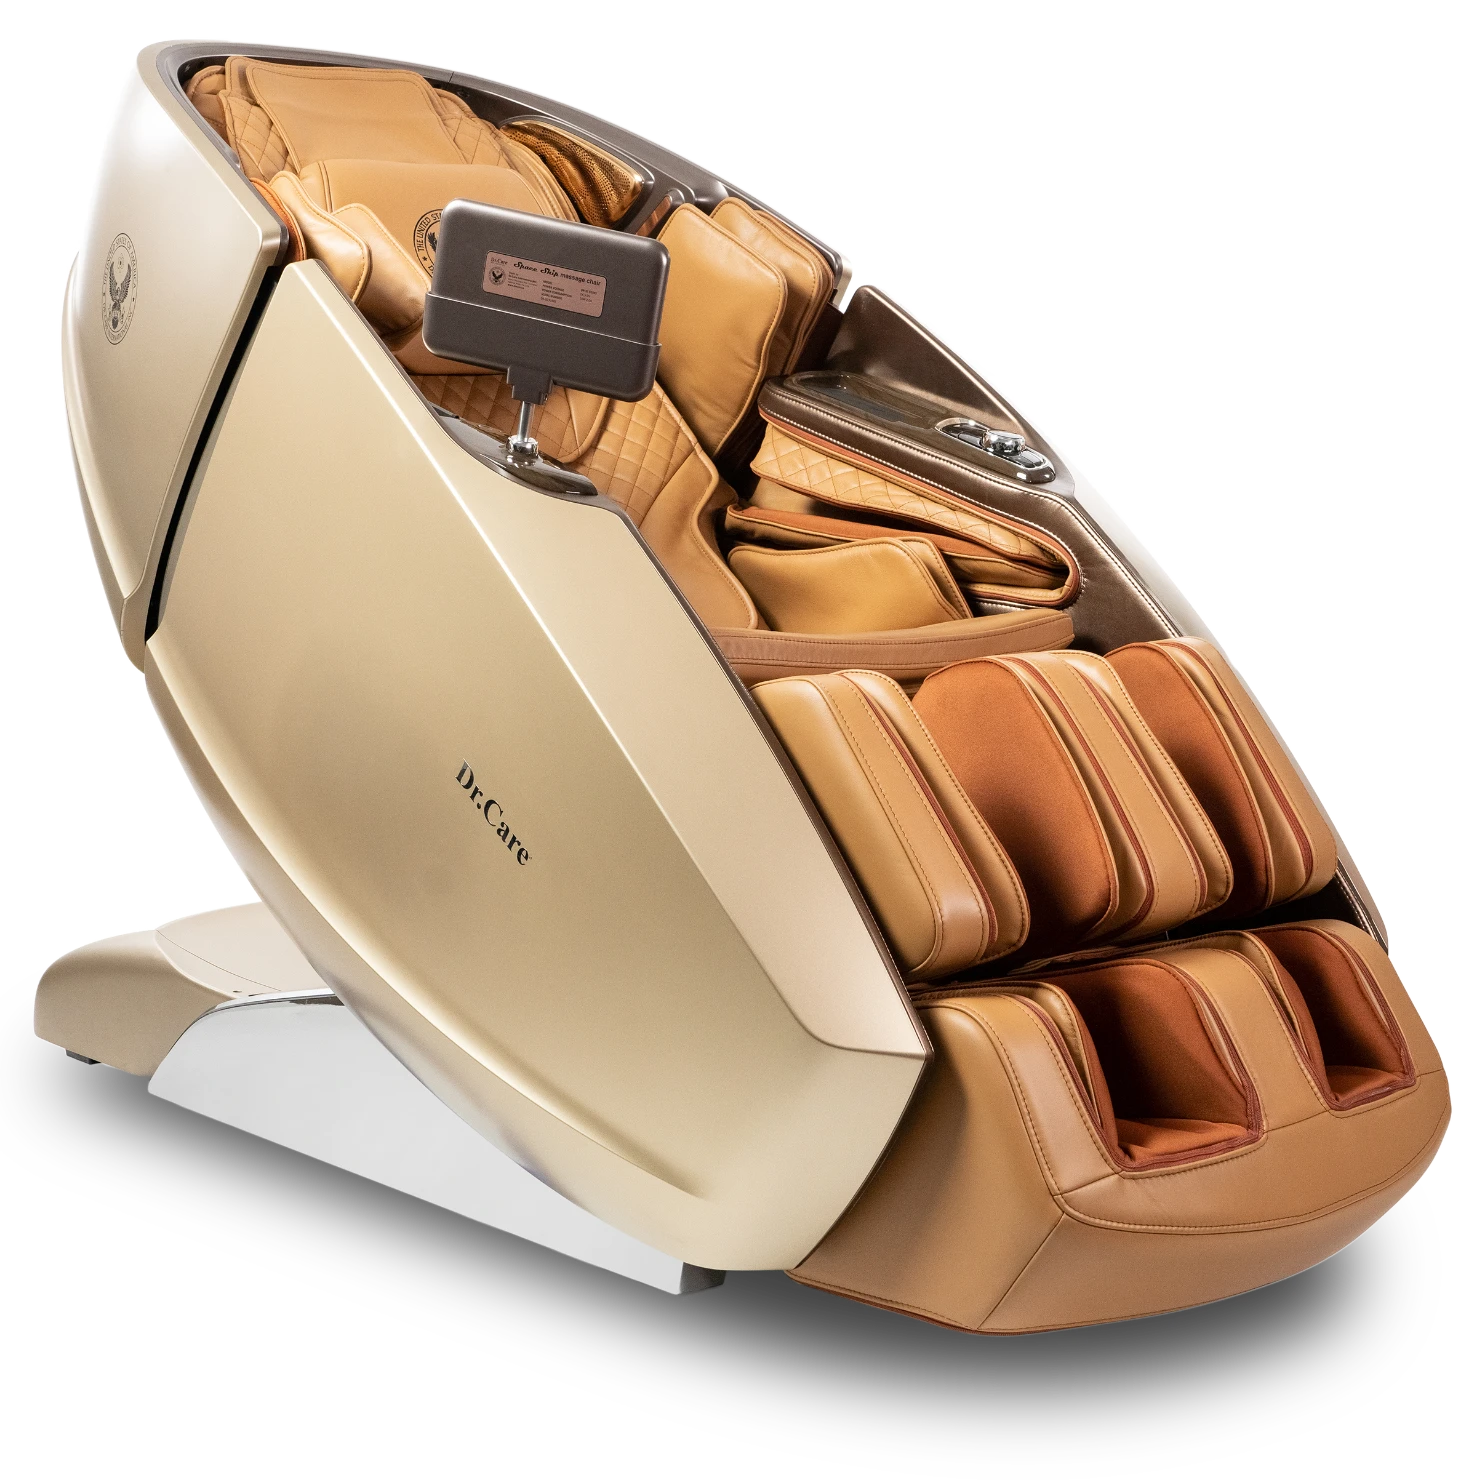 dr-ss 919x full-body massage chair